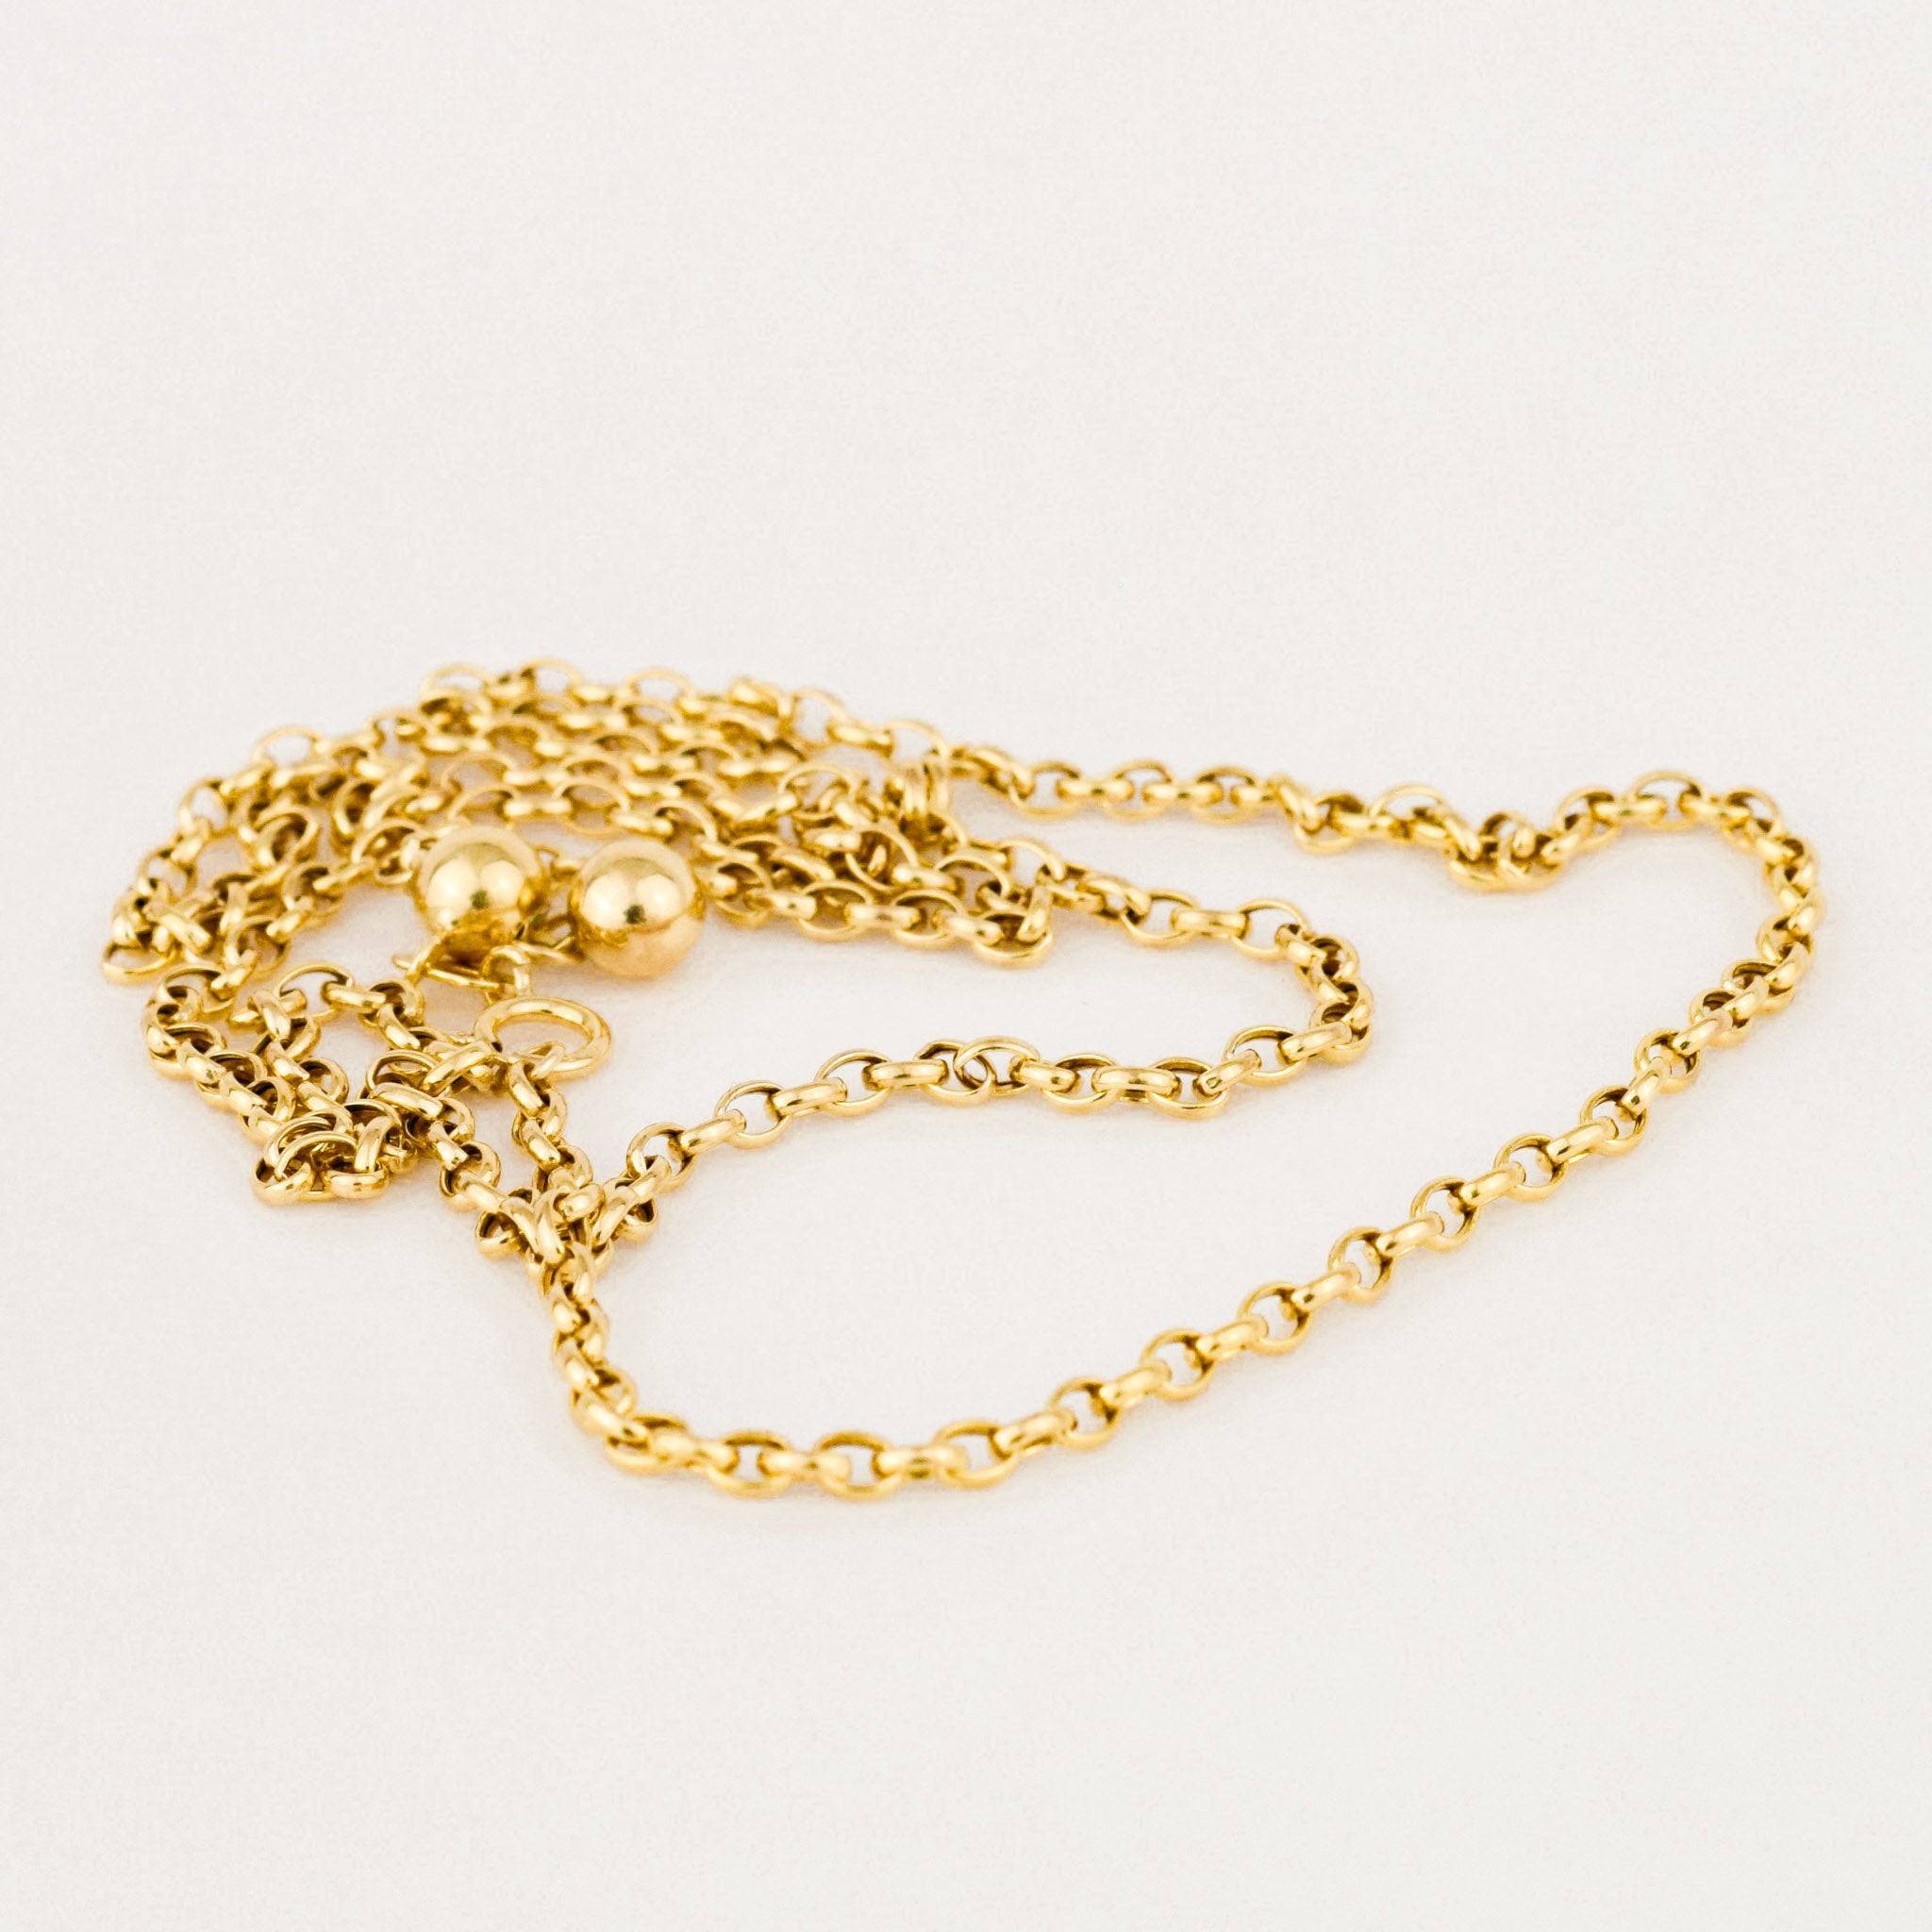 vintage gold rolo adjustable chain necklace